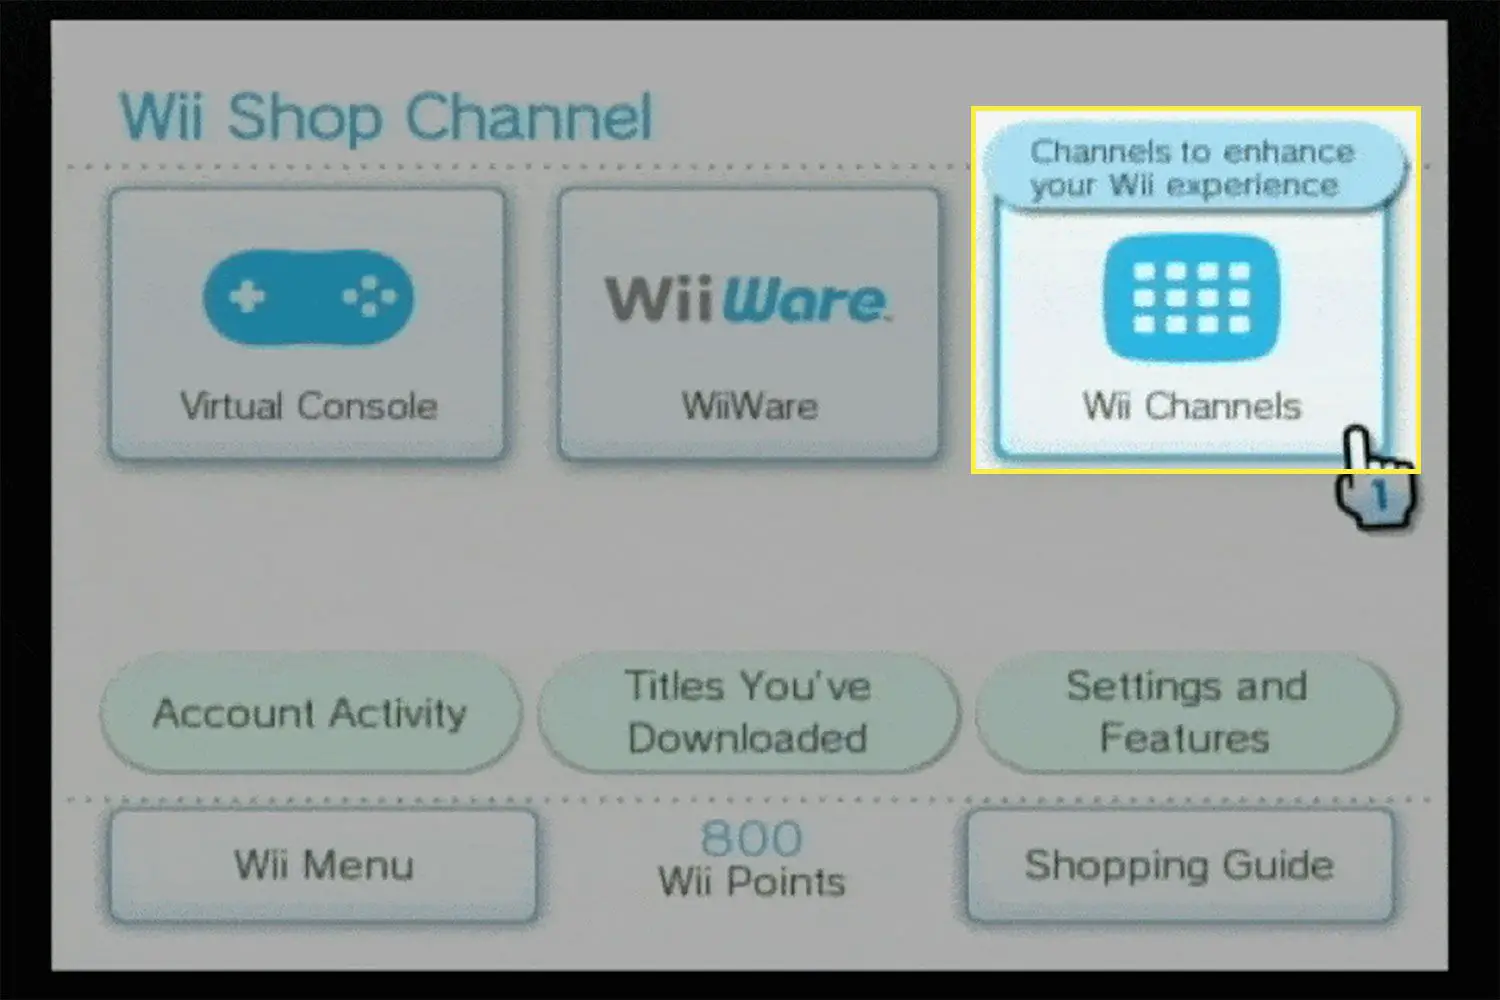 A opção Wii Channels no Wii Shop Channel